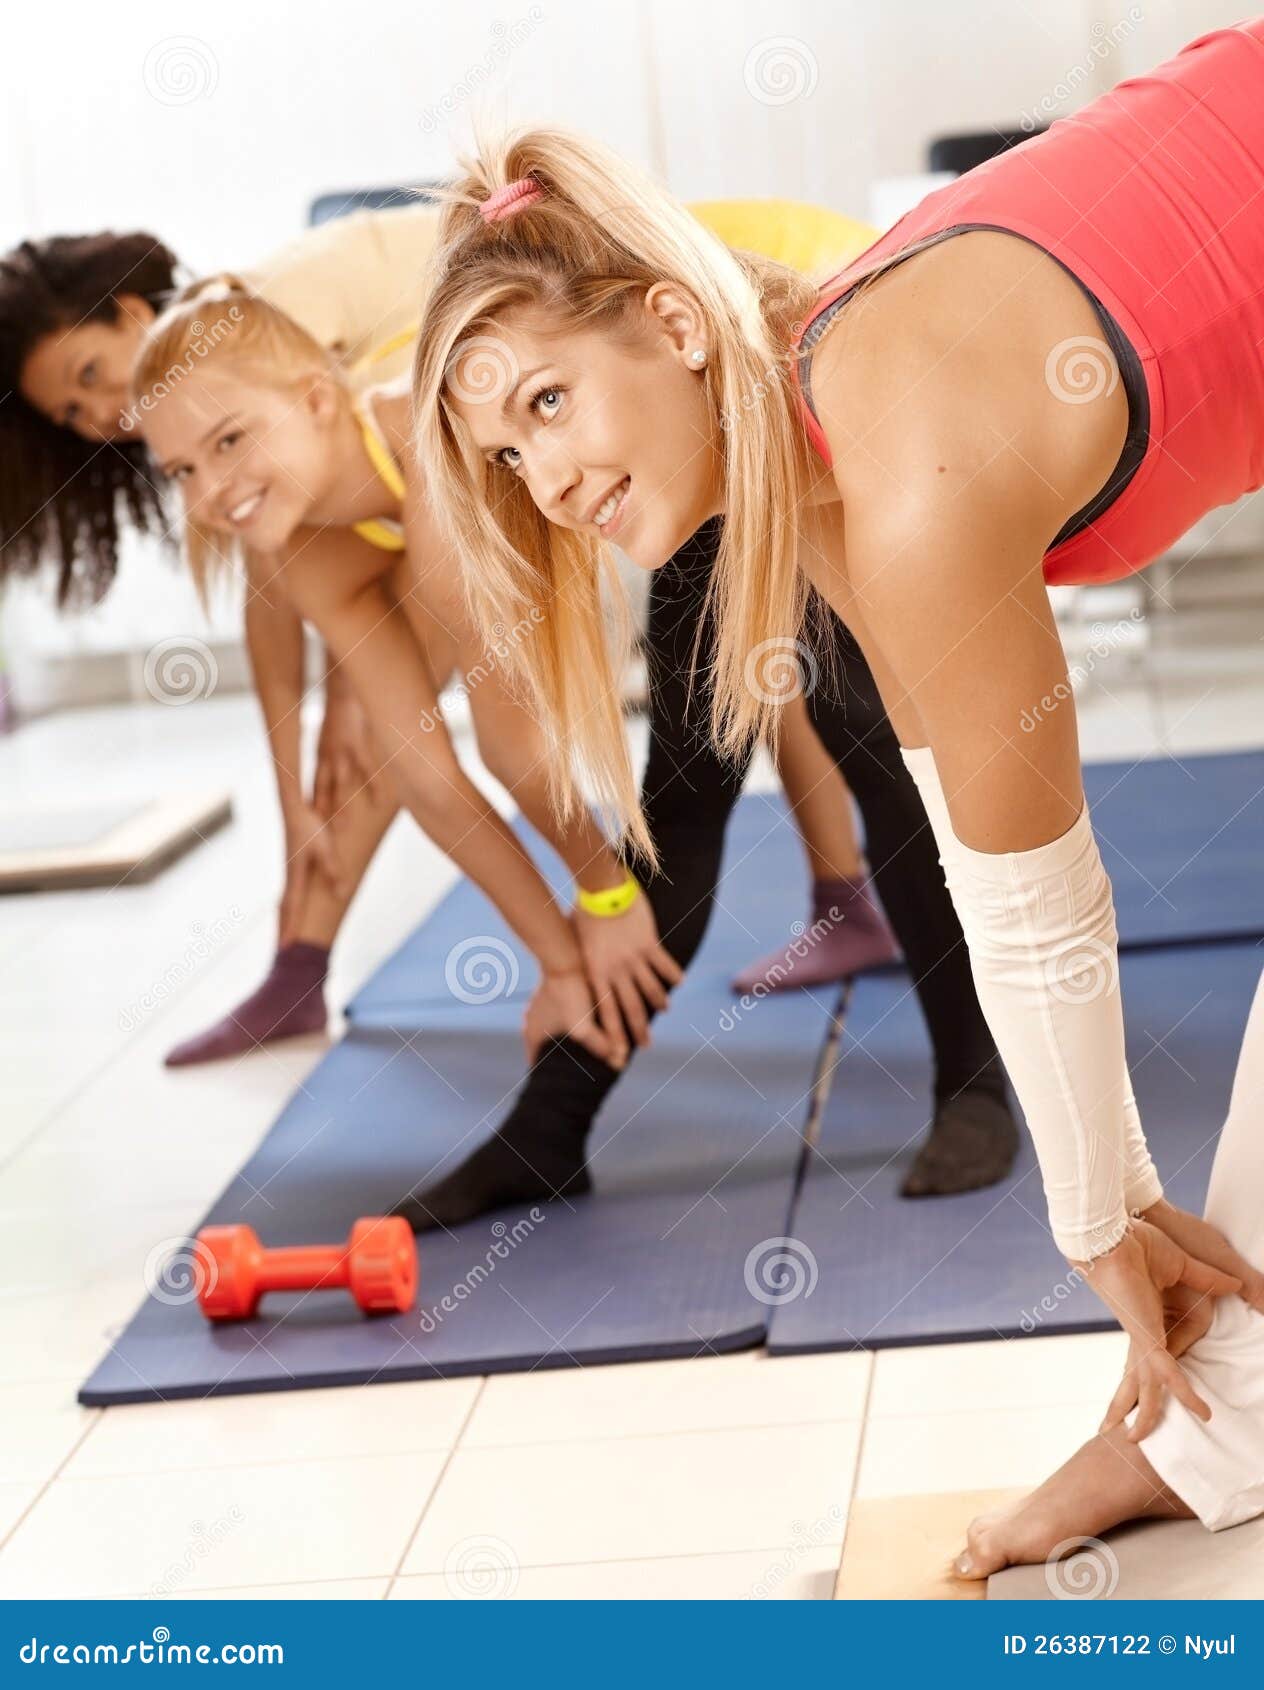 Pretty Girls Exercising Bending Stock Photography Image 26